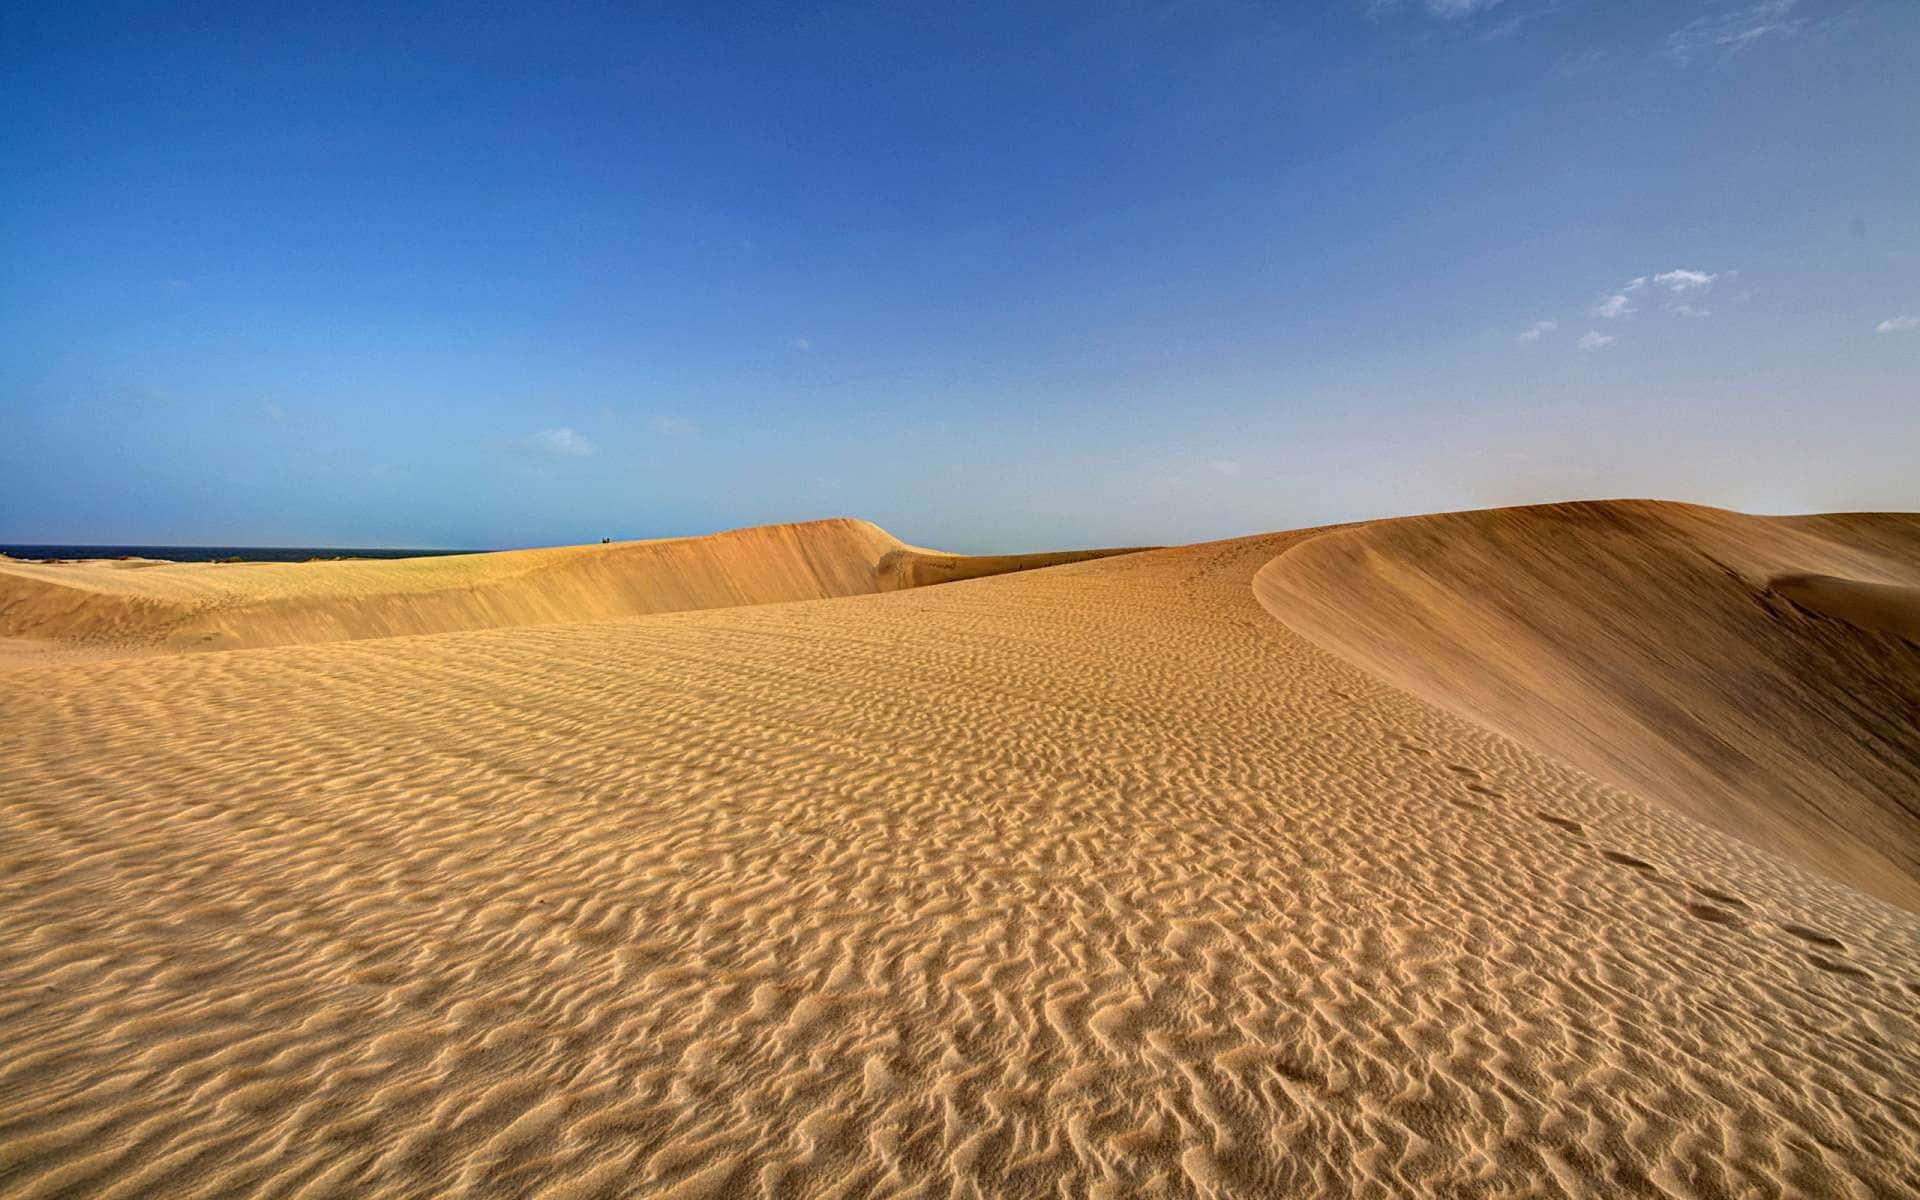 A vast and open desert landscape.